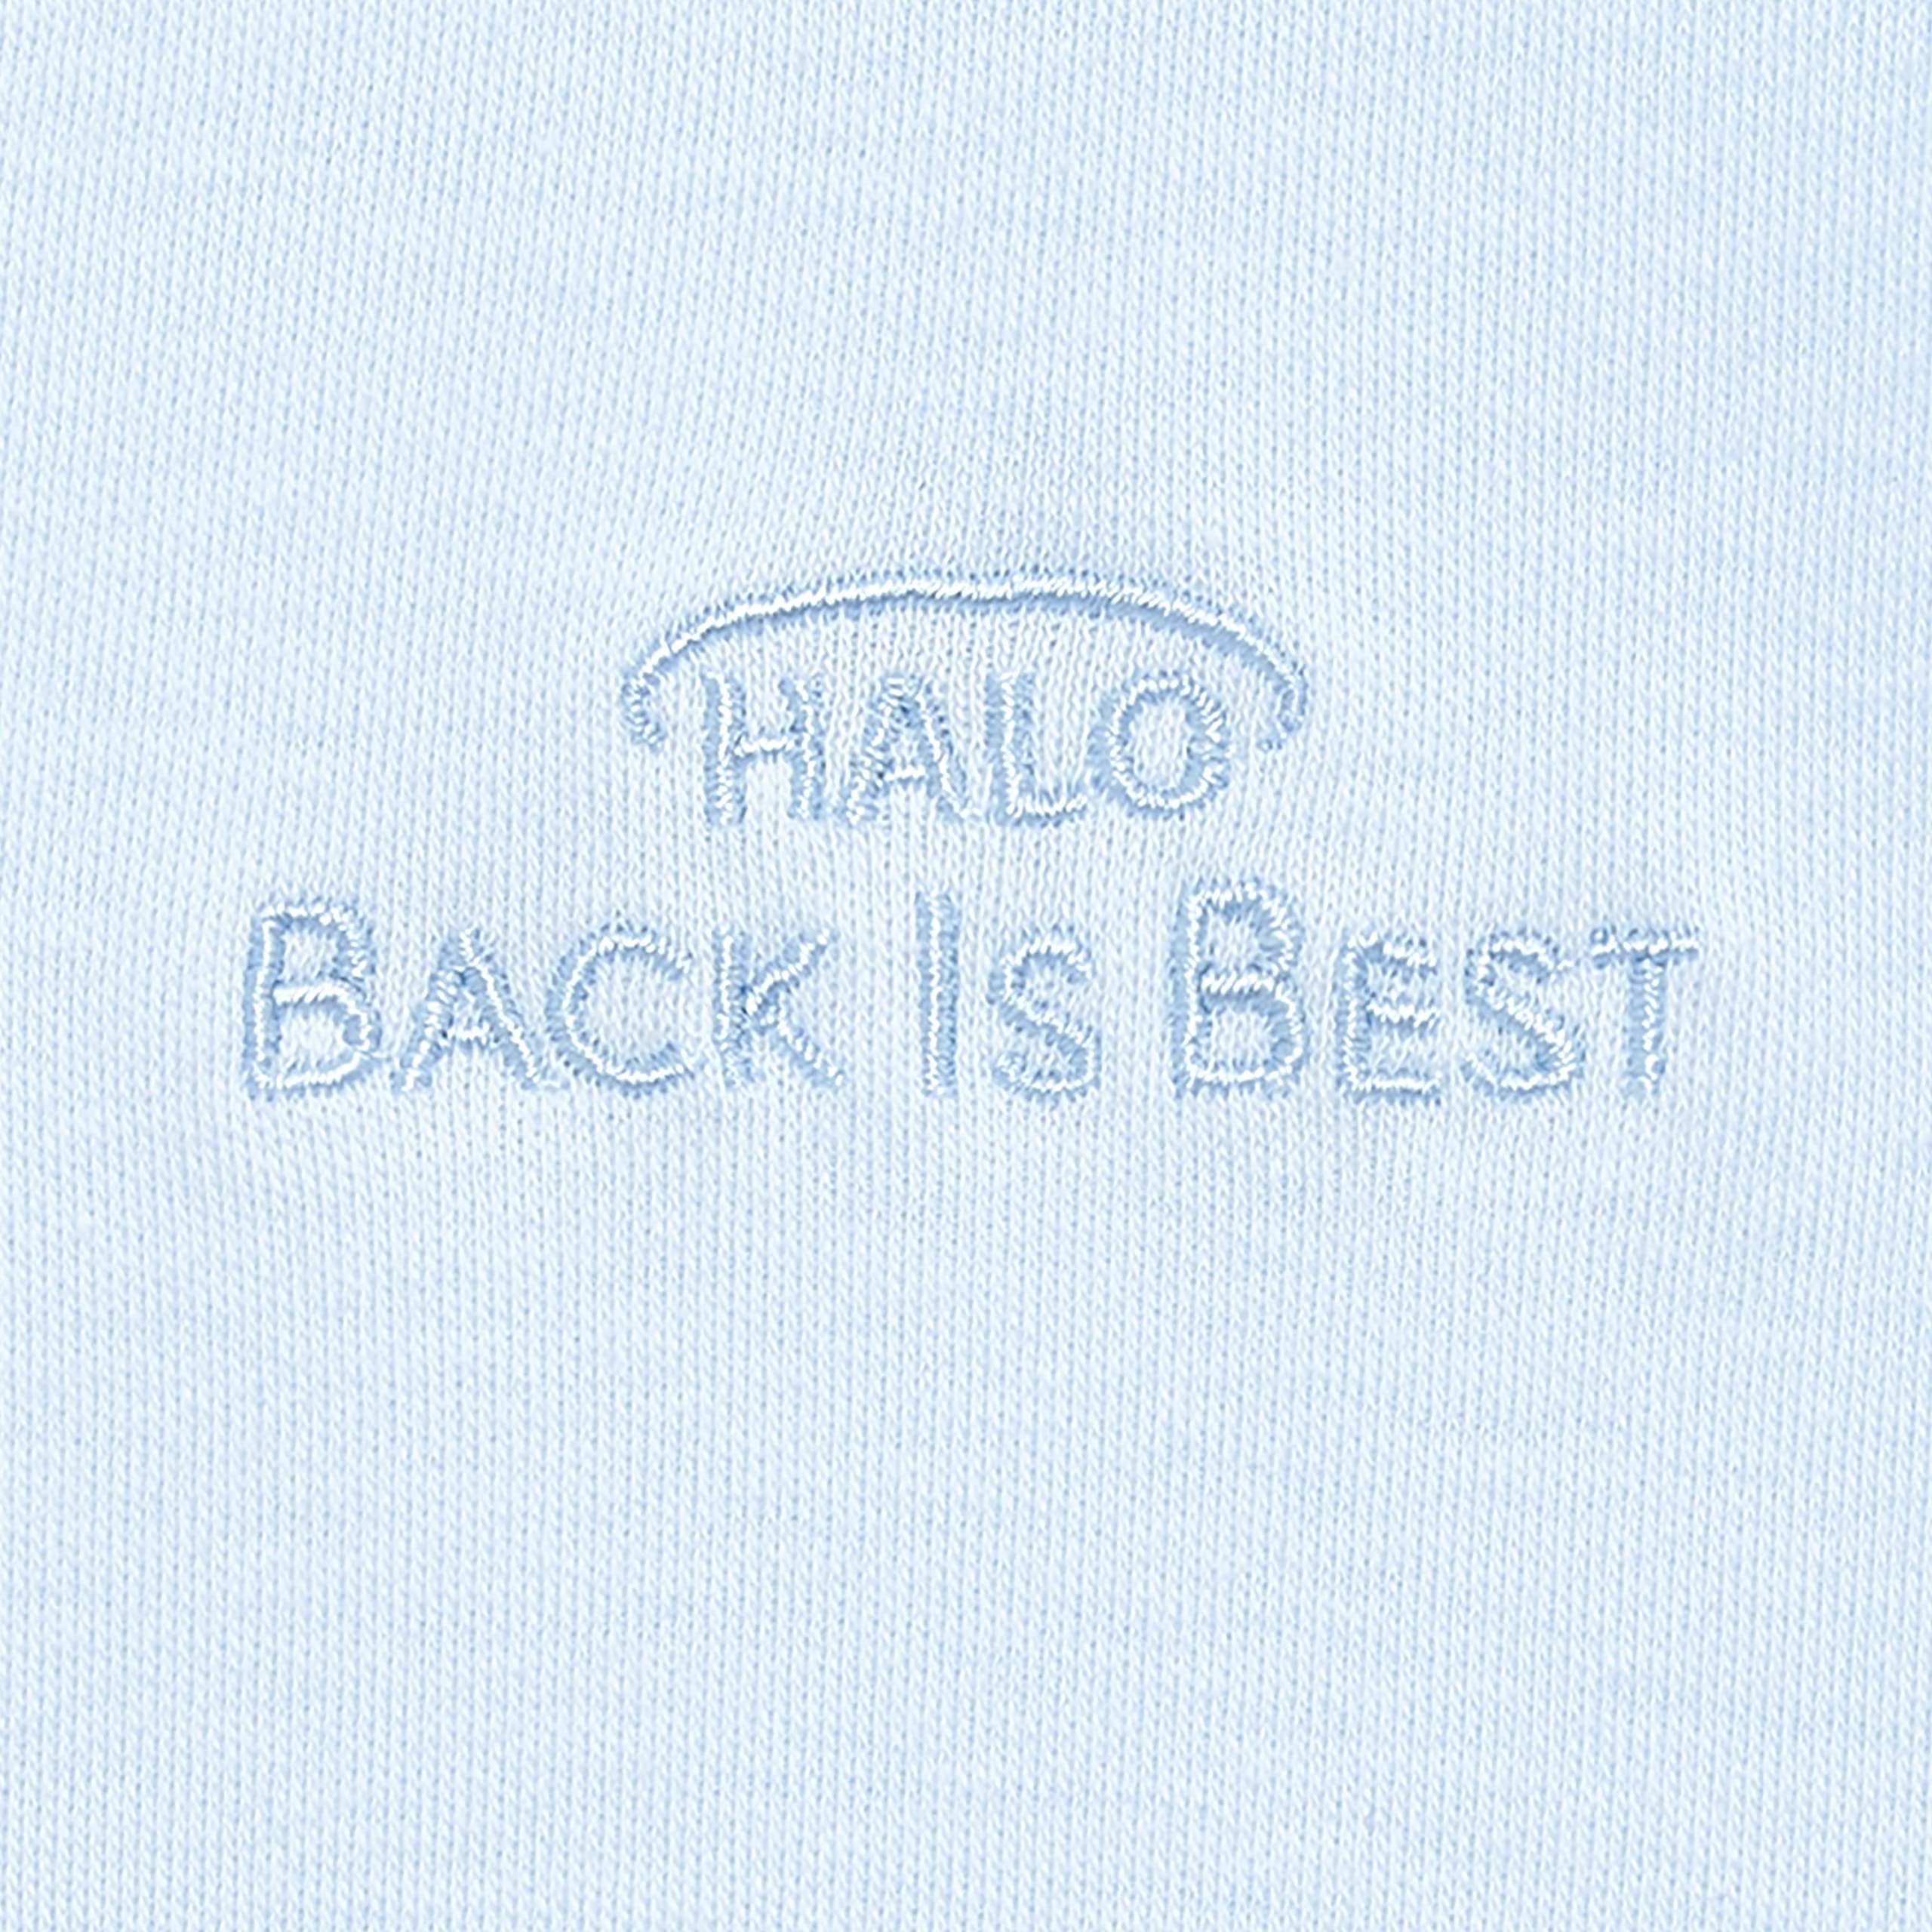 HALO Sleepsack, 100% Cotton Wearable Blanket, Swaddle Transition Sleeping Bag, TOG 0.5, Baby Blue, Small